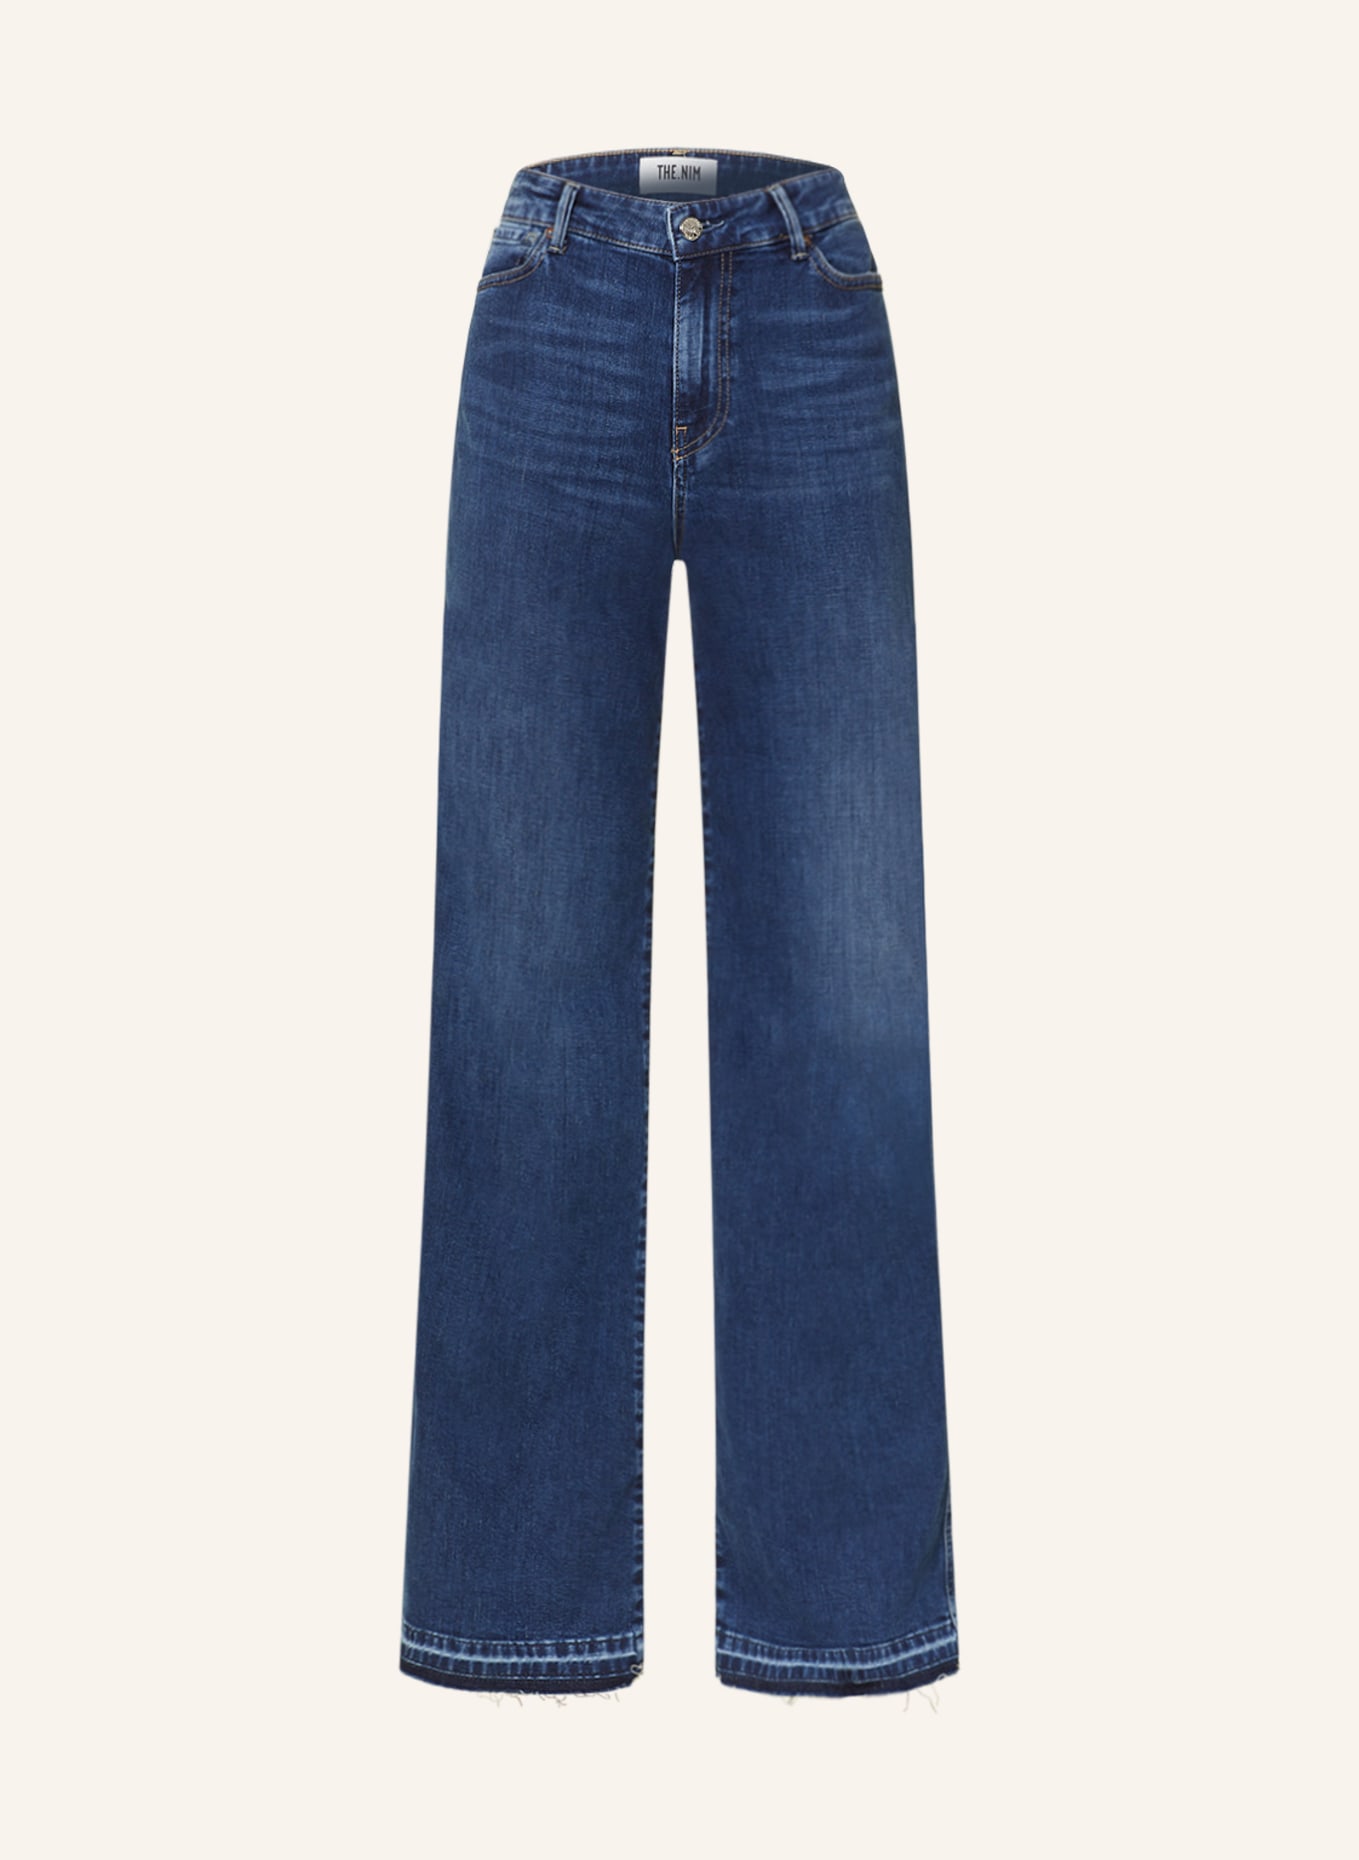 THE.NIM STANDARD Jeans DEBBIE, Farbe: W802B-MDD DARK WASHE BLUE (Bild 1)